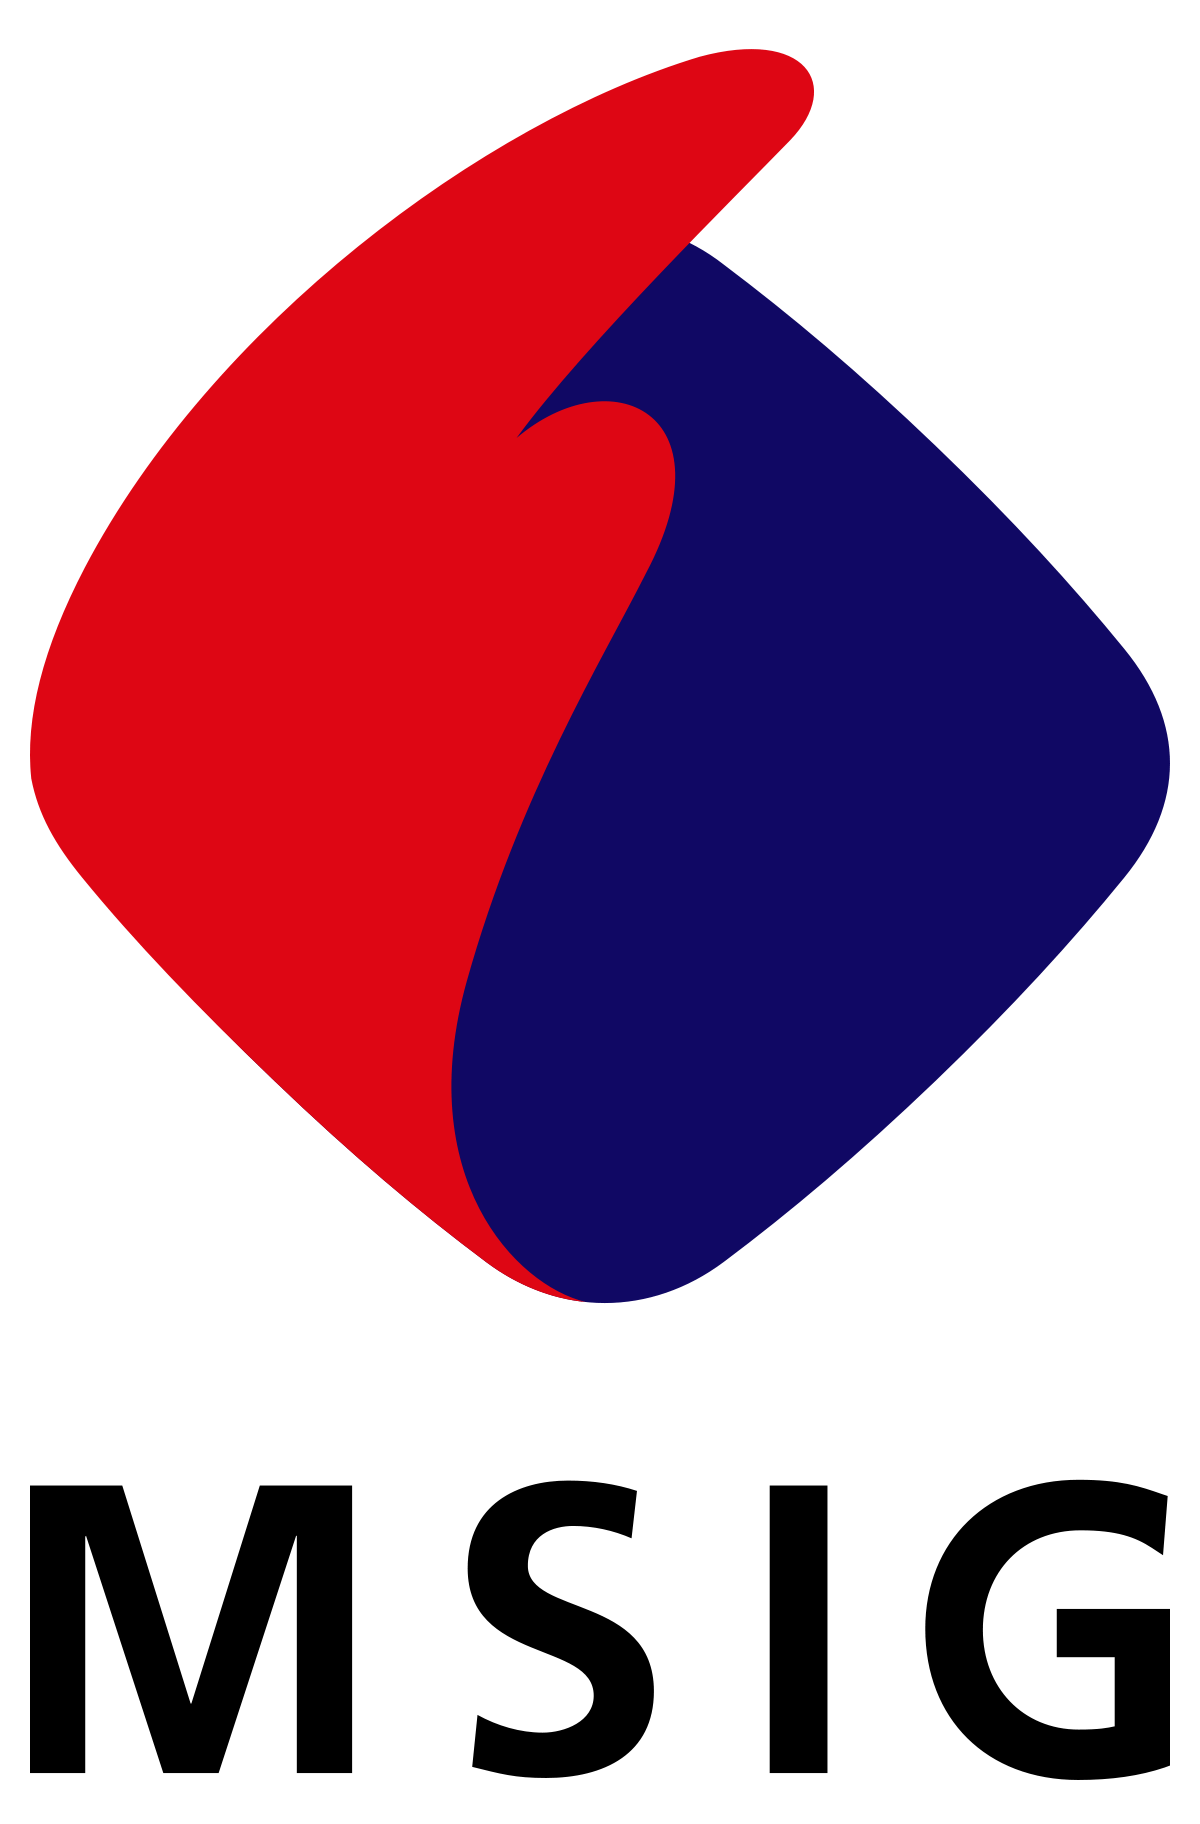 Mitsui Logo - Mitsui Sumitomo Insurance Group